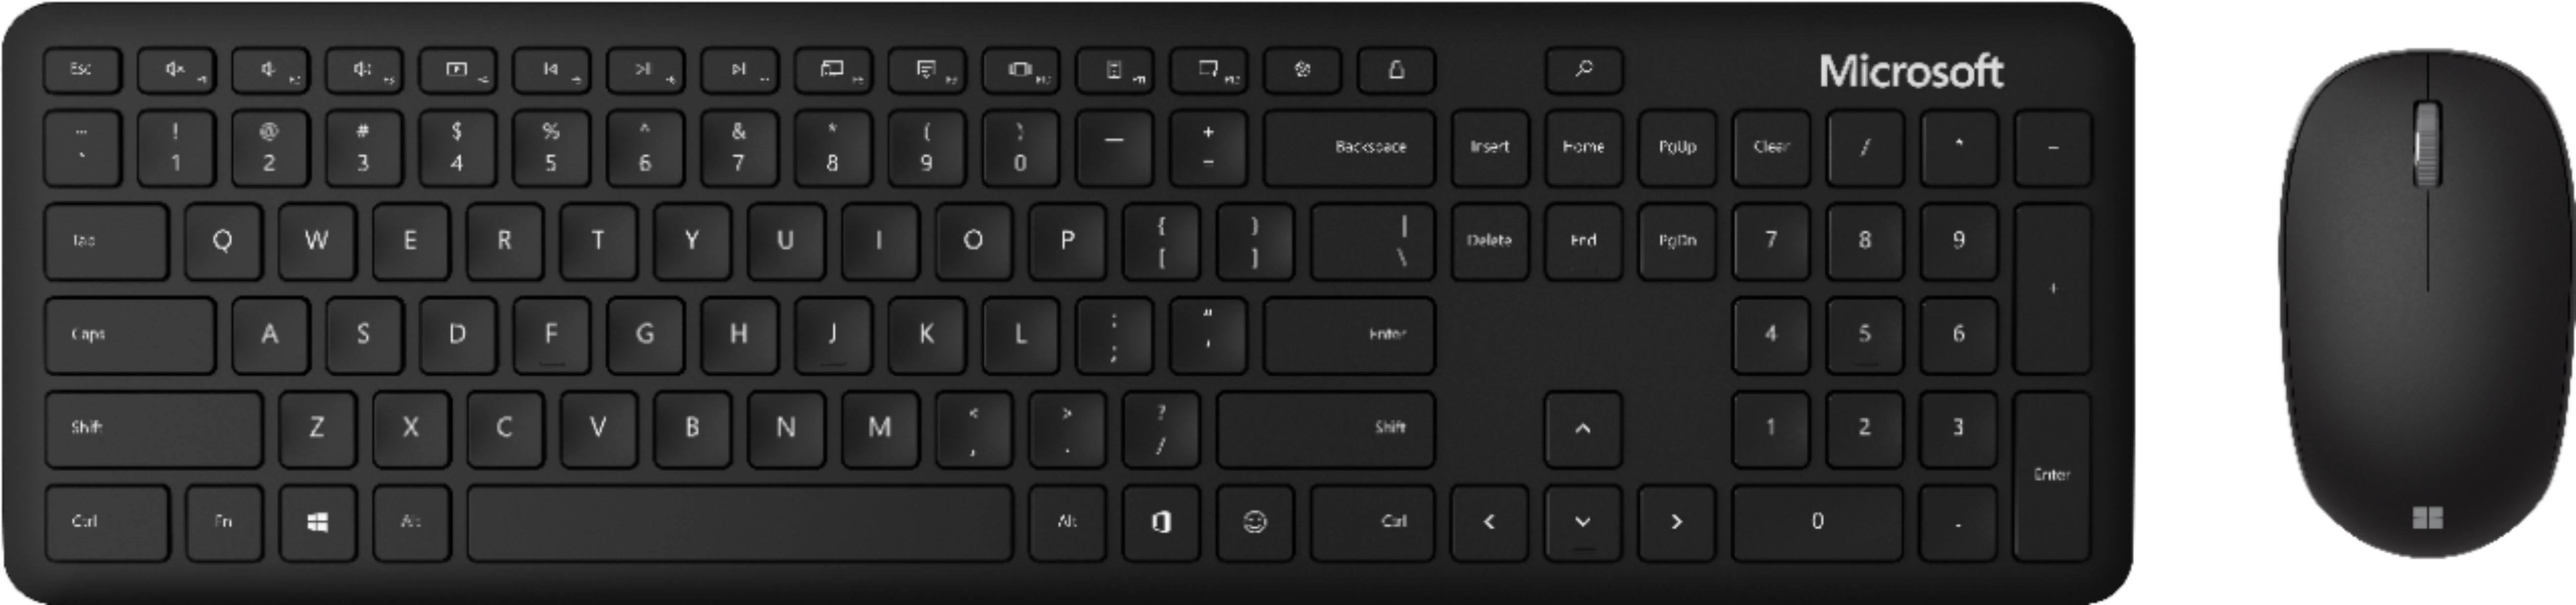 Microsoft - QHG-00001 Full-size Bluetooth Mechanical Keyboard and Mouse Bundle - Black